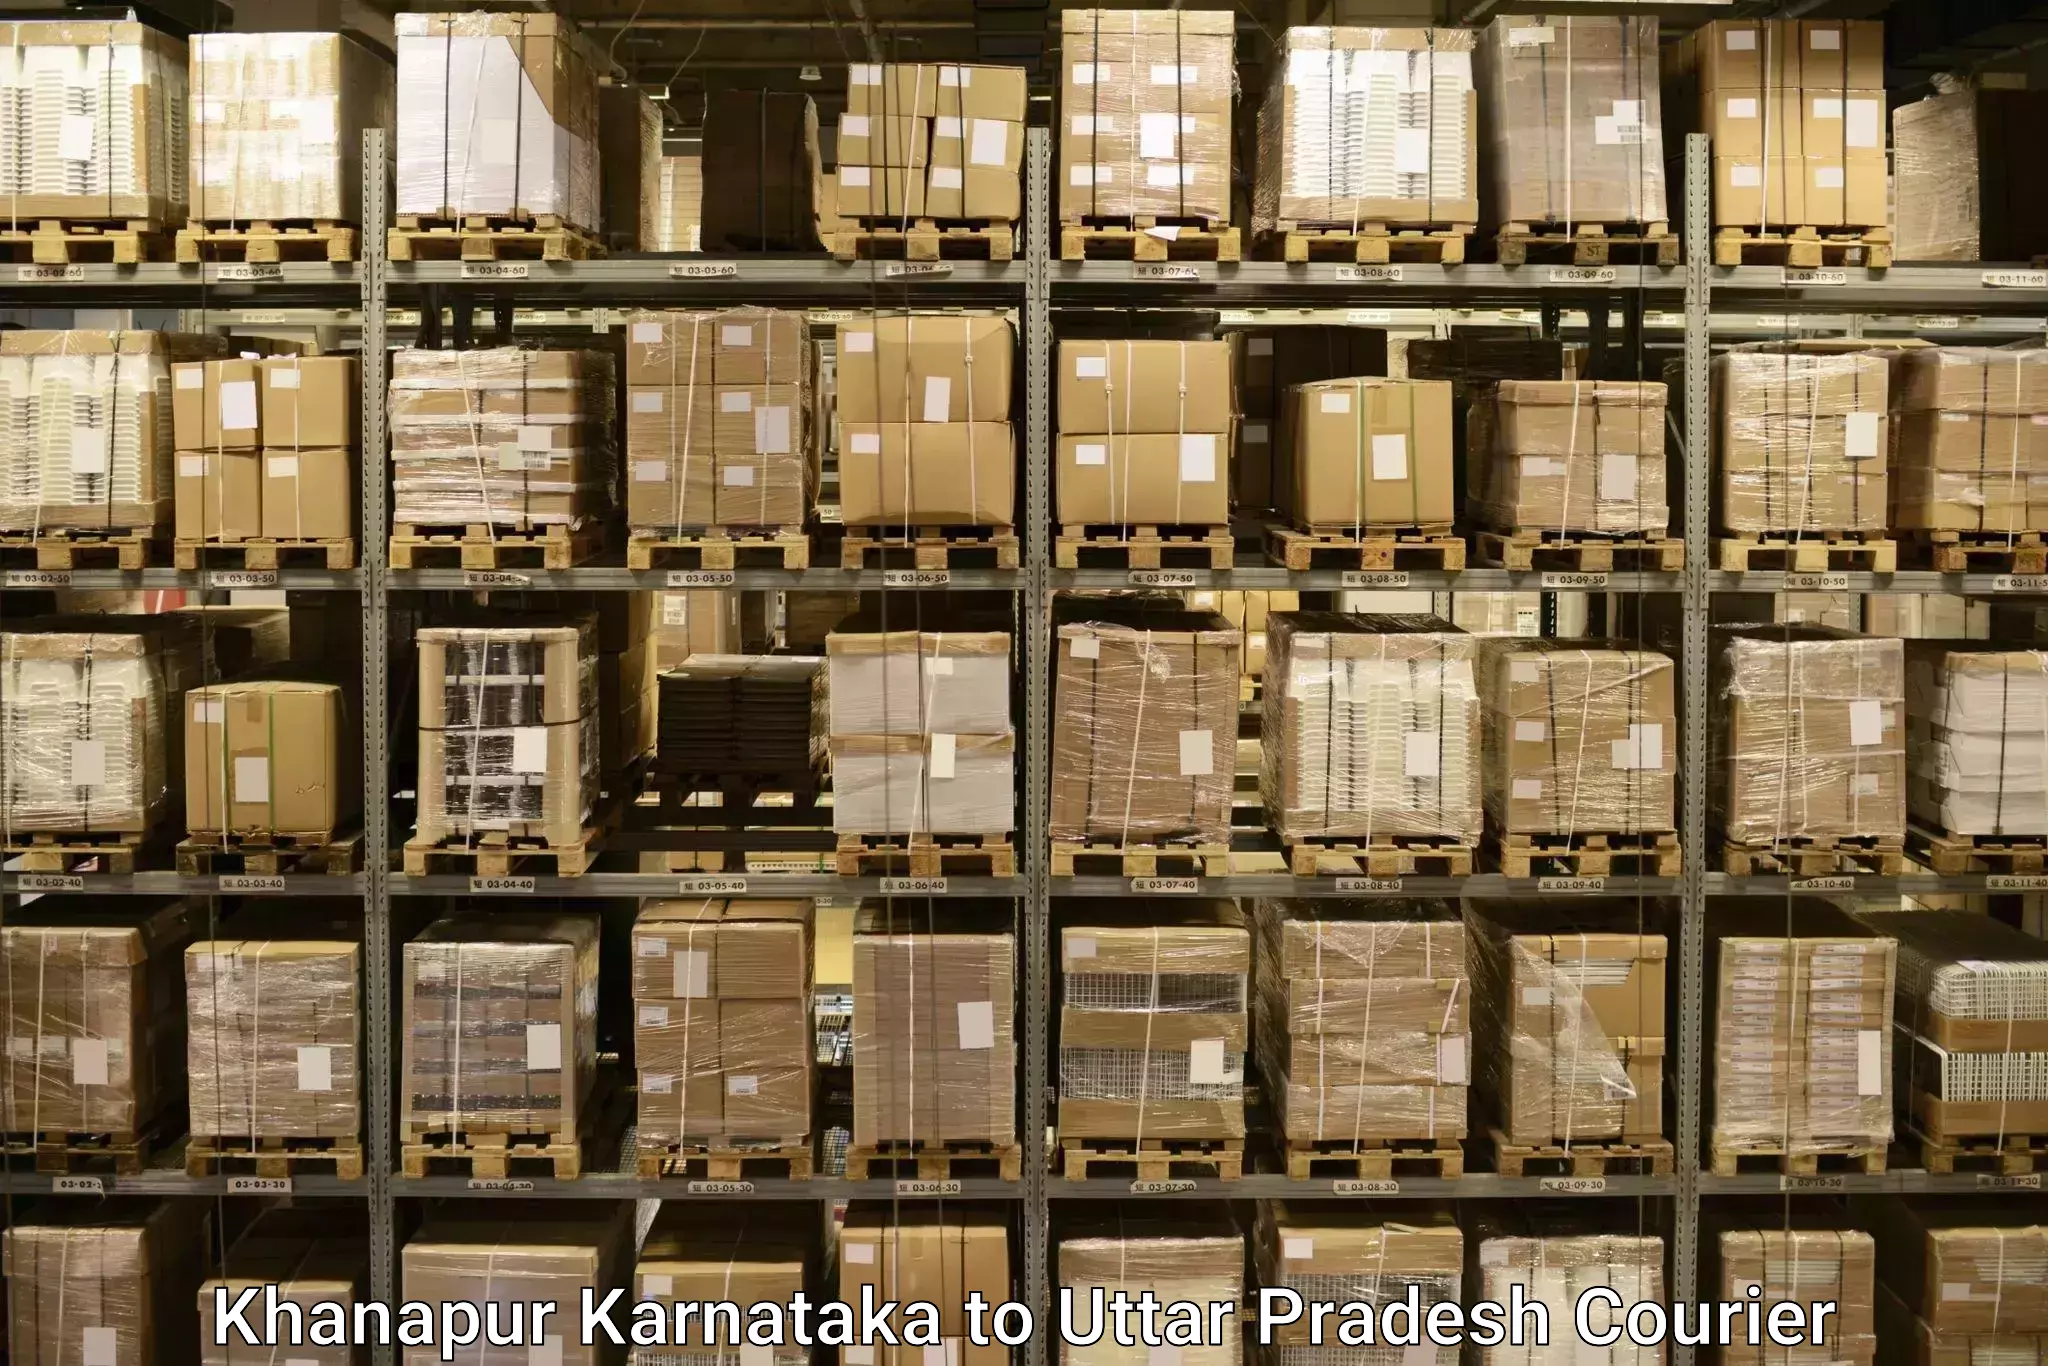 Luggage delivery network Khanapur Karnataka to Dadri